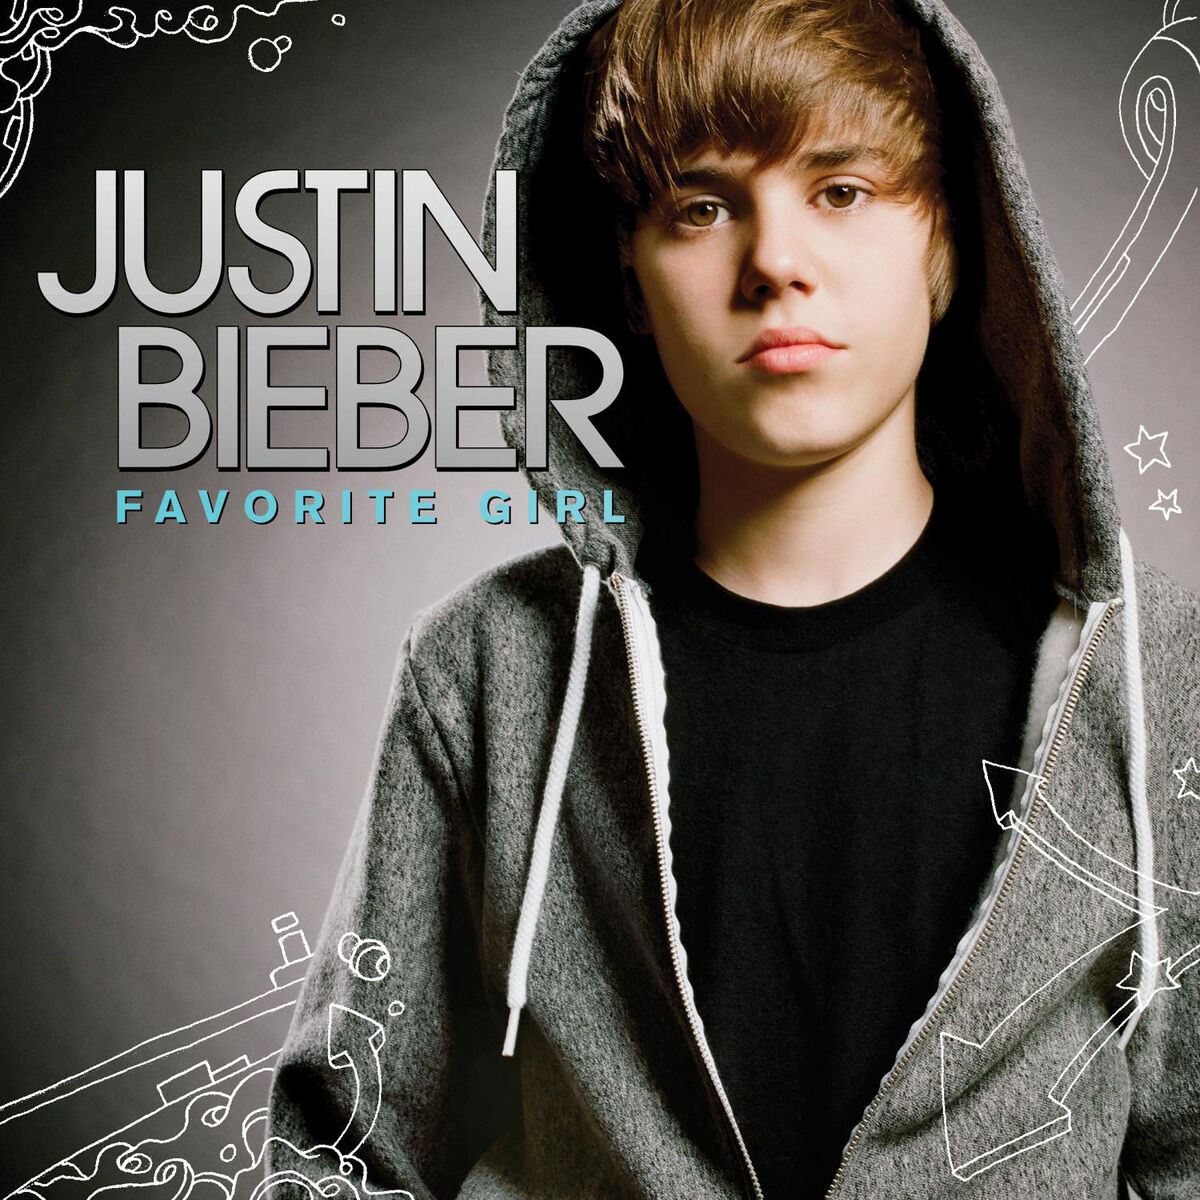 Justin Bieber - One Time. [Lyrics] 